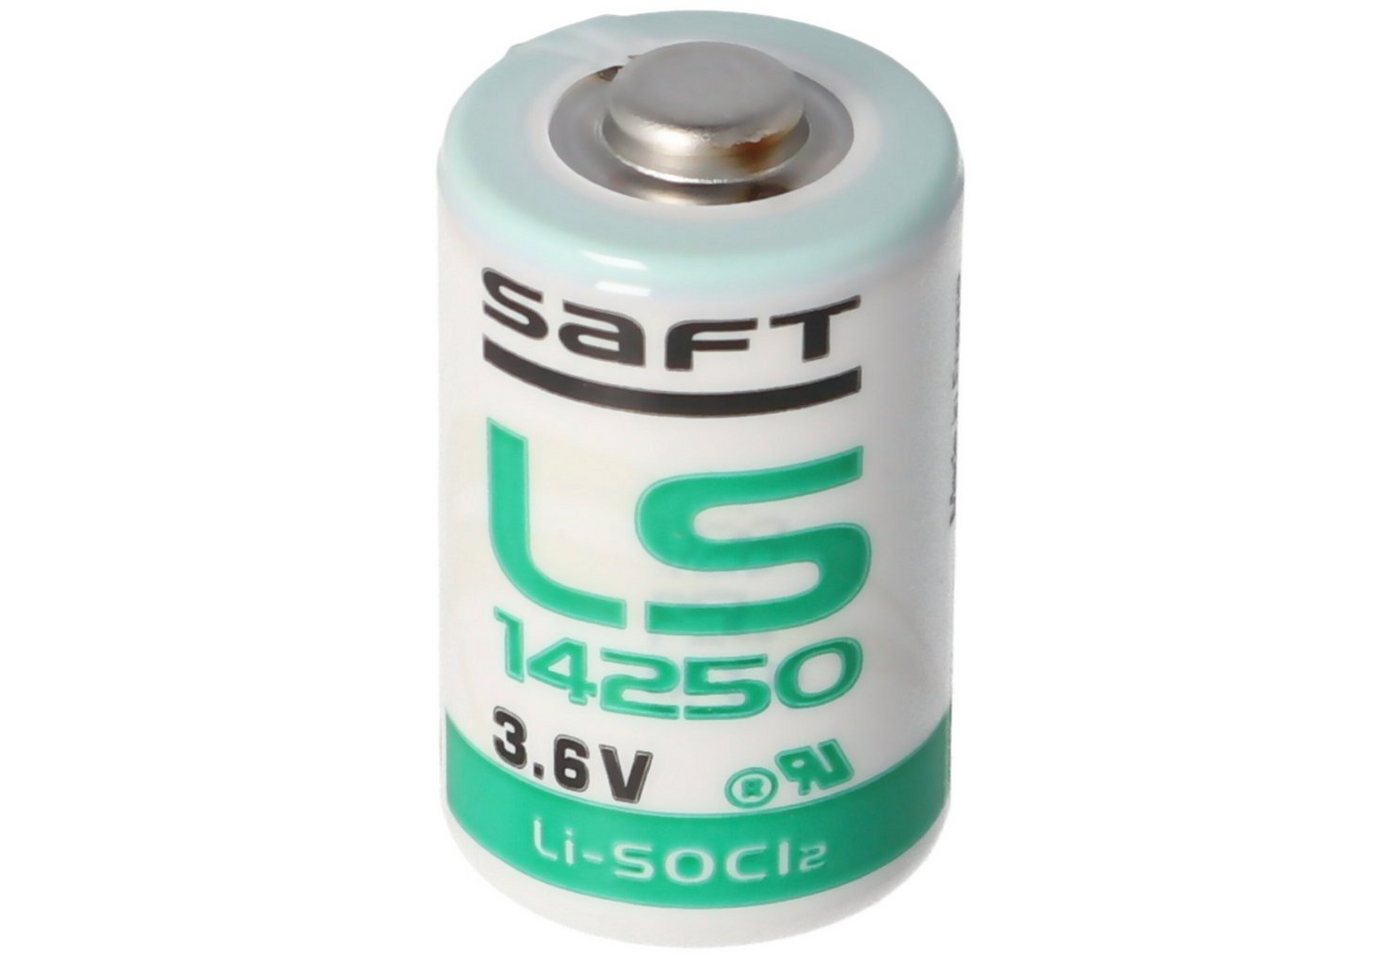 Saft SAFT LS14250 Lithium Batterie Li-SOCI2, Size 1/2 AA LST14250 Batterie, (3,6 V) von Saft